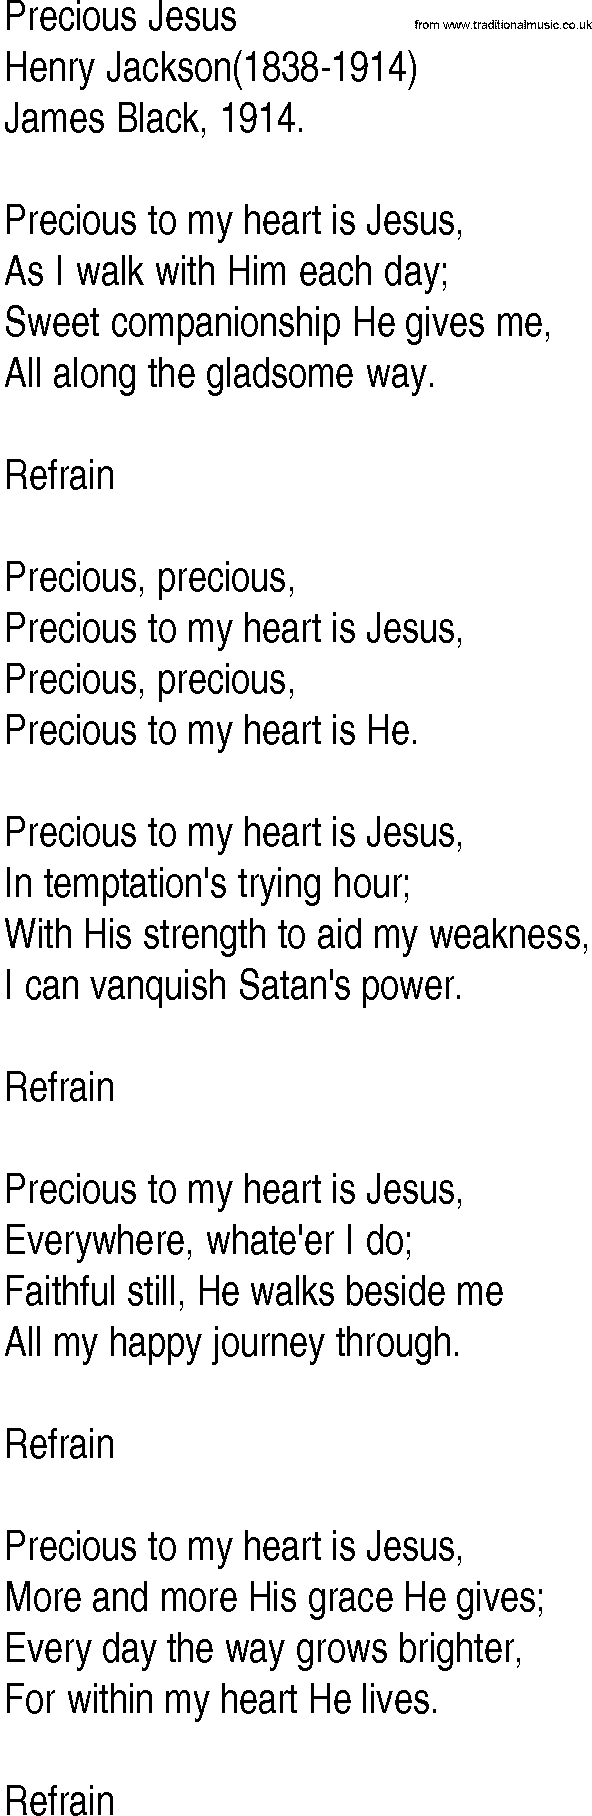 Hymn and Gospel Song: Precious Jesus by Henry Jackson lyrics